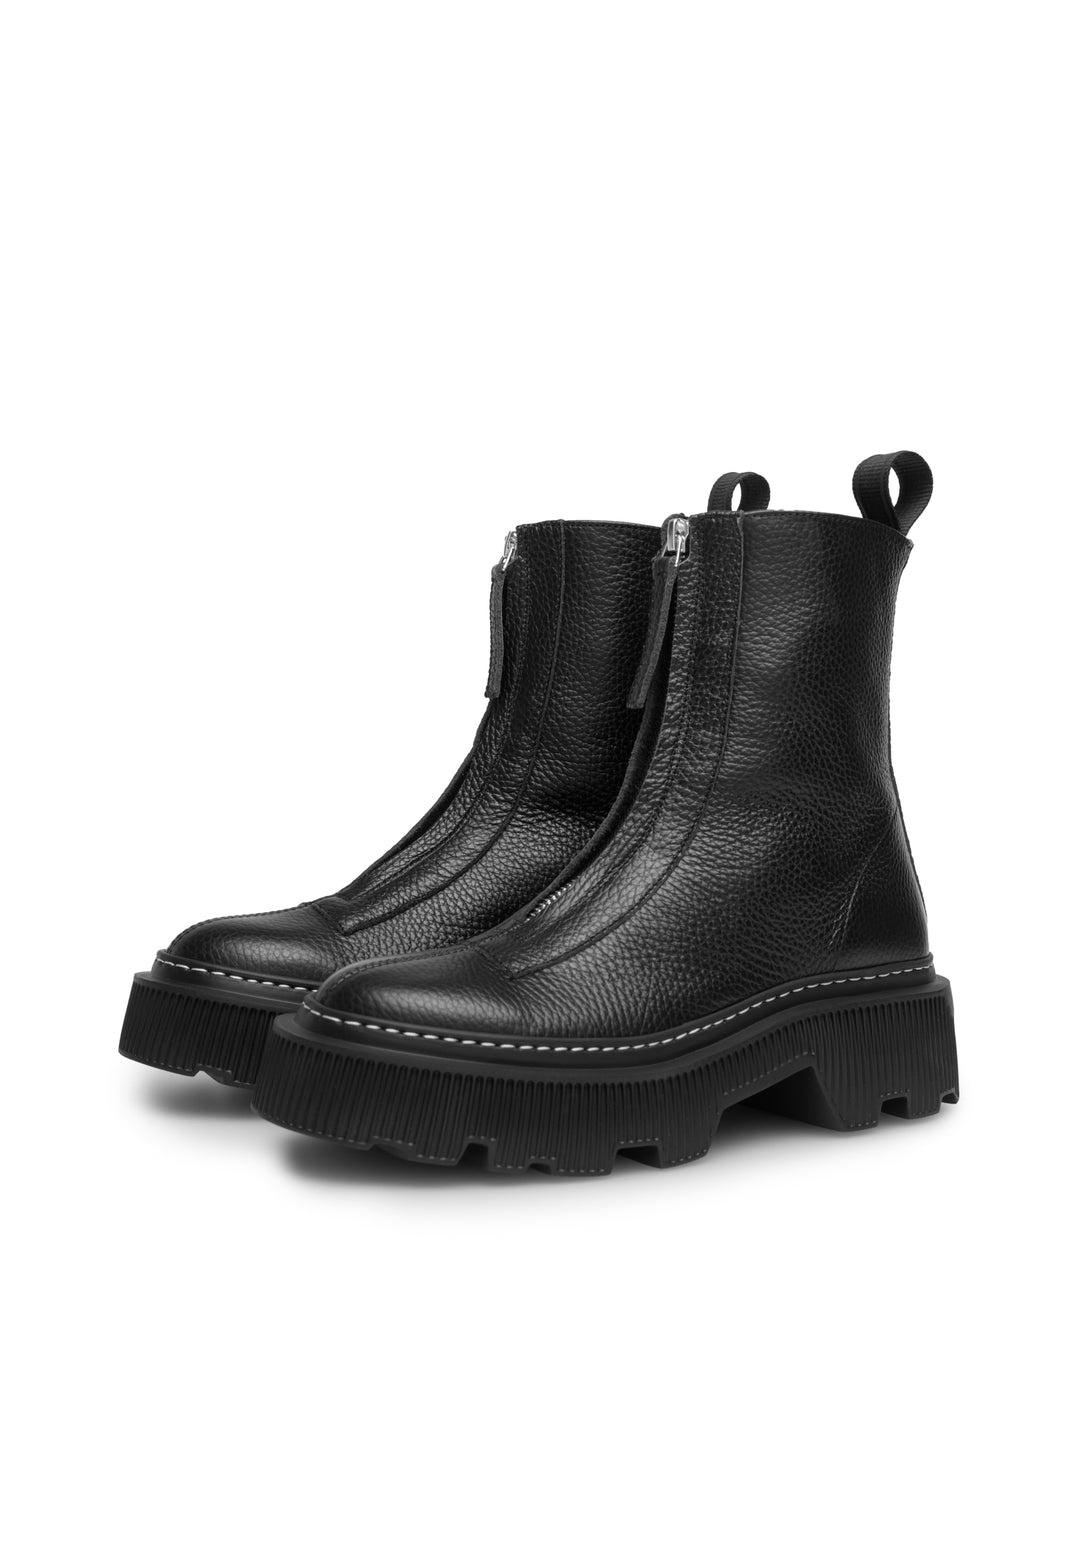 LÄST Shane - Grained Leather - Black Ankle Boots Black